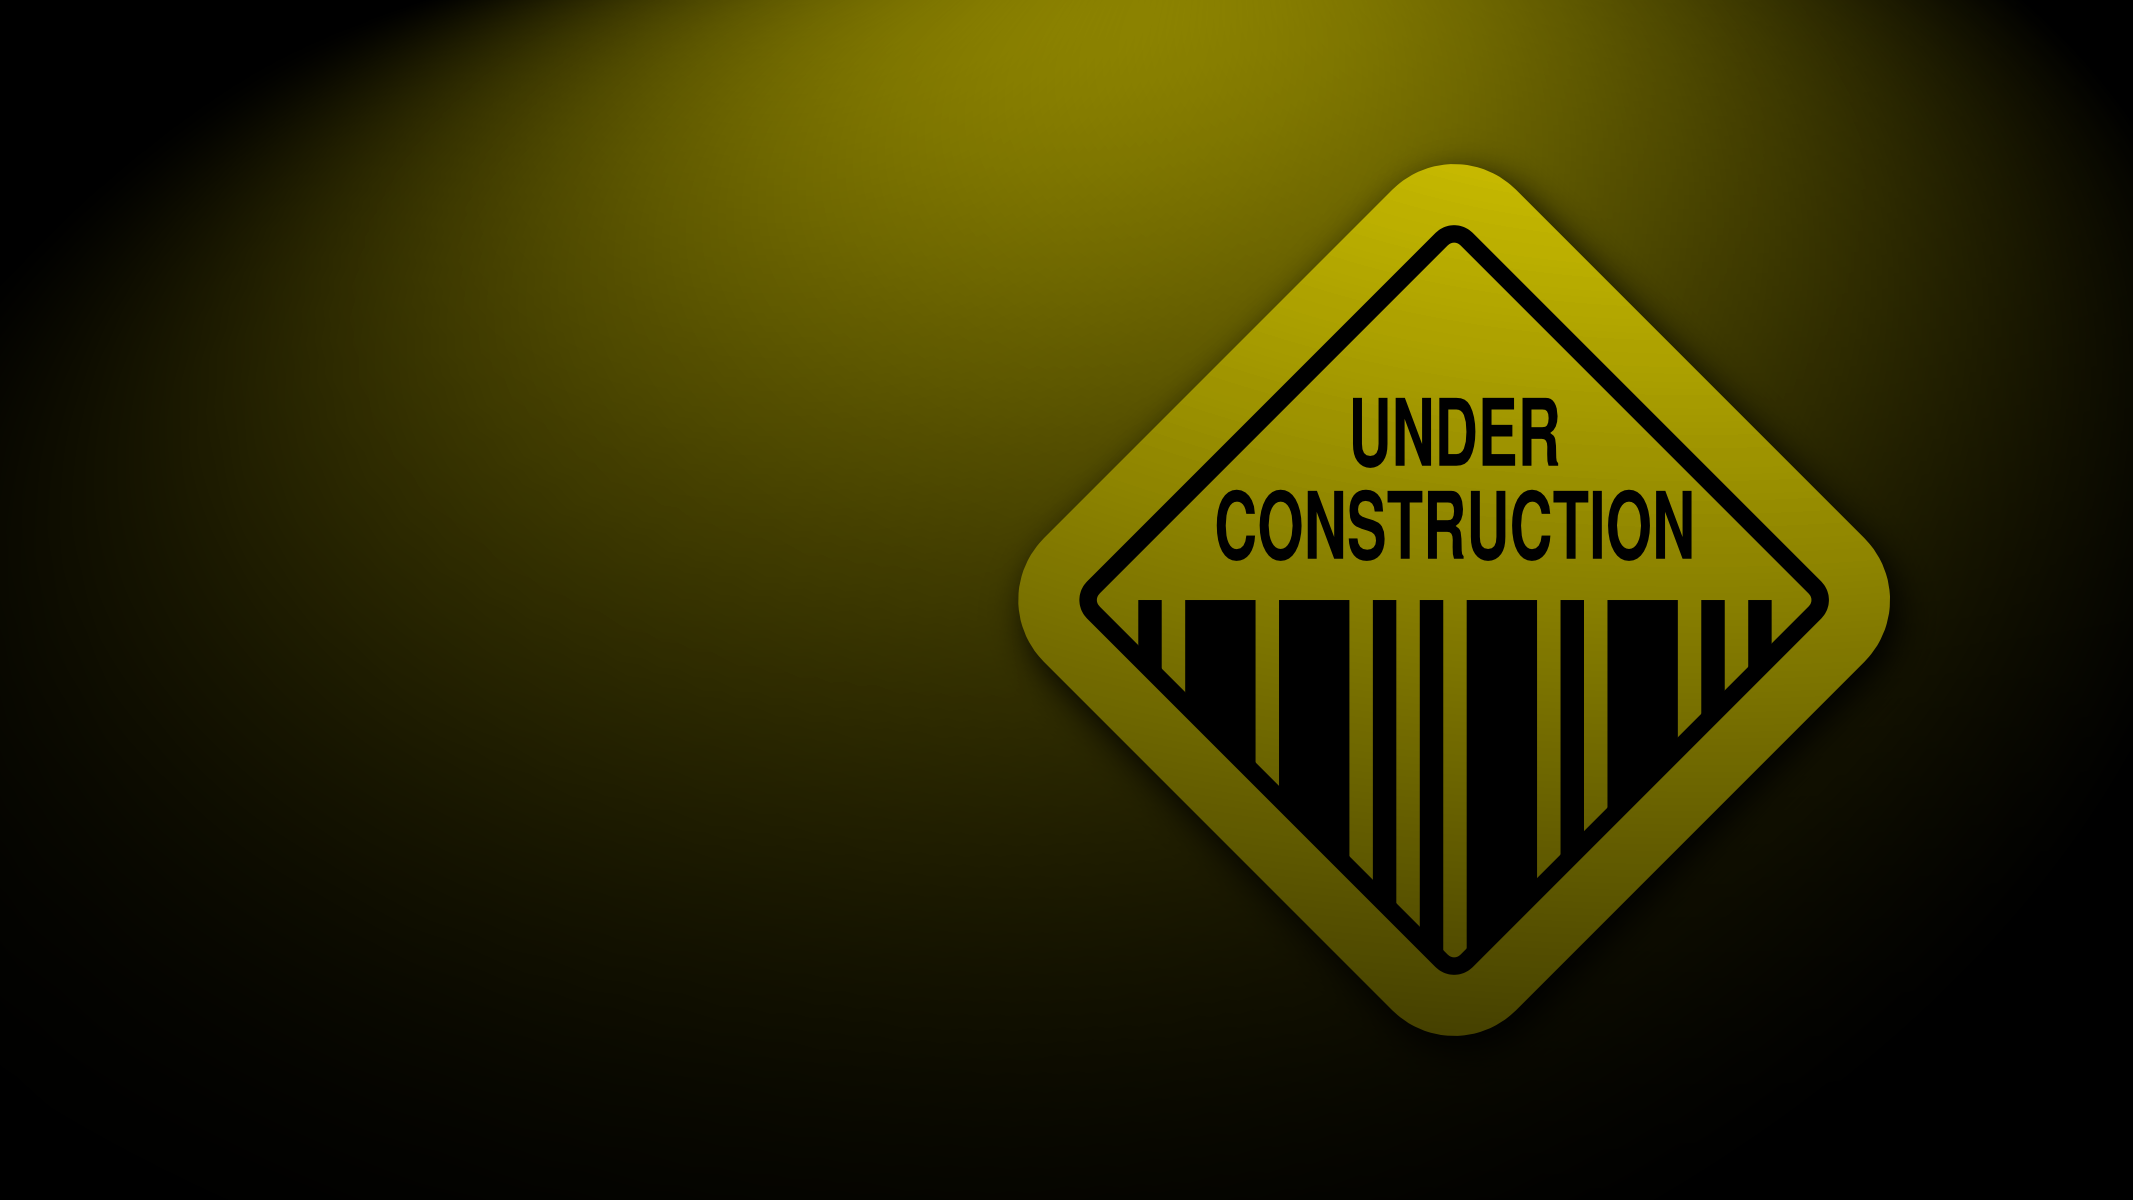 Under Construction Logo - File:Wikidata logo under construction sign wallpaper.png - Wikimedia ...